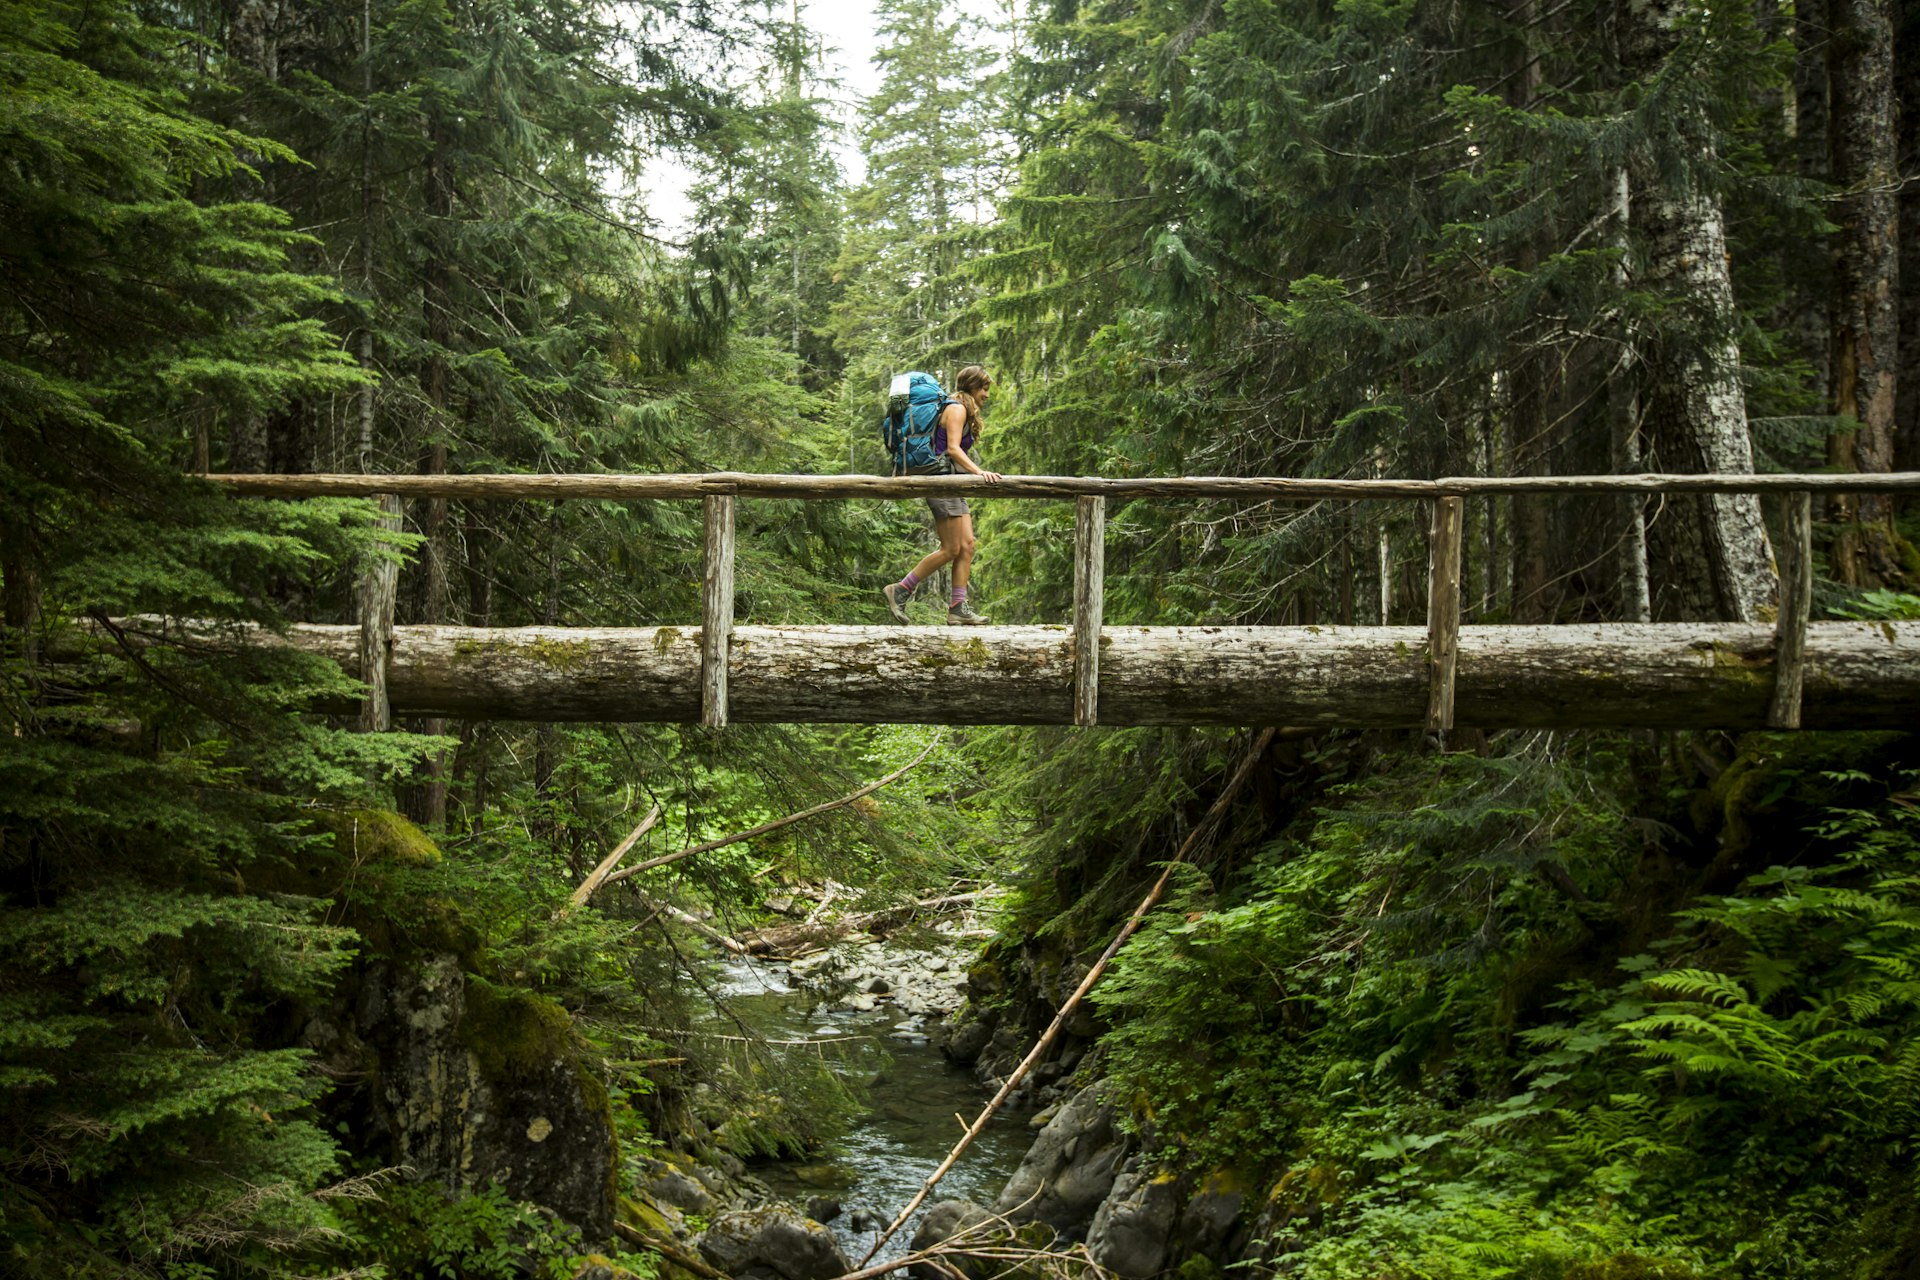 A female hiker walking across a log bridge in the forest